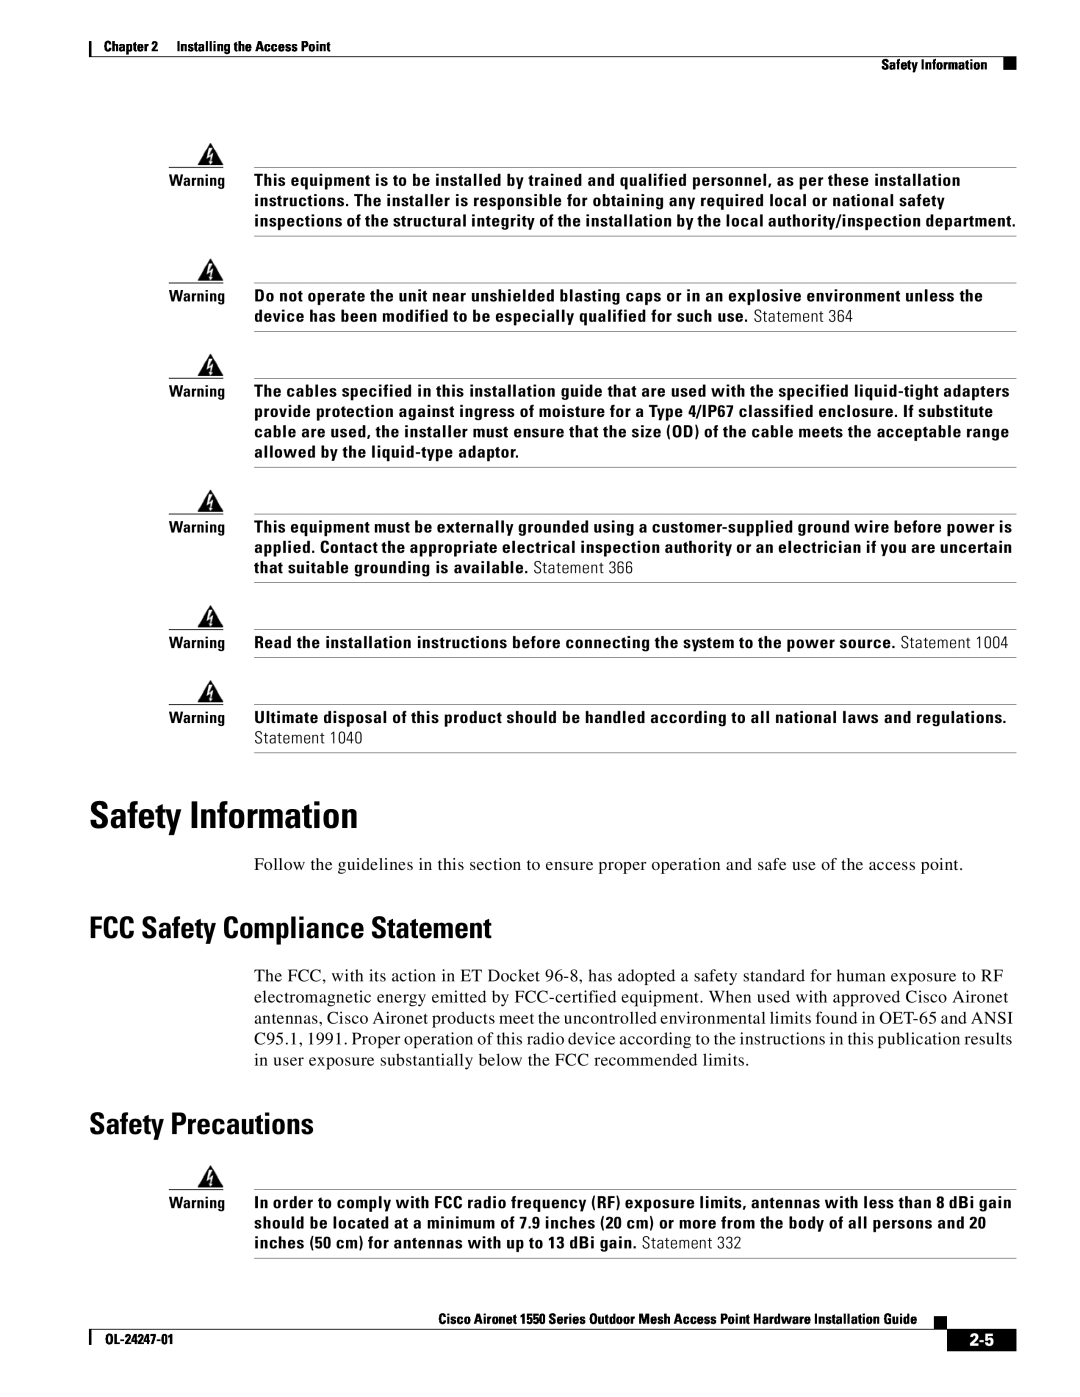 Cisco Systems AIRCAP1552EAK9RF, AIRCAP1552EUAK9 Safety Information, FCC Safety Compliance Statement, Safety Precautions 